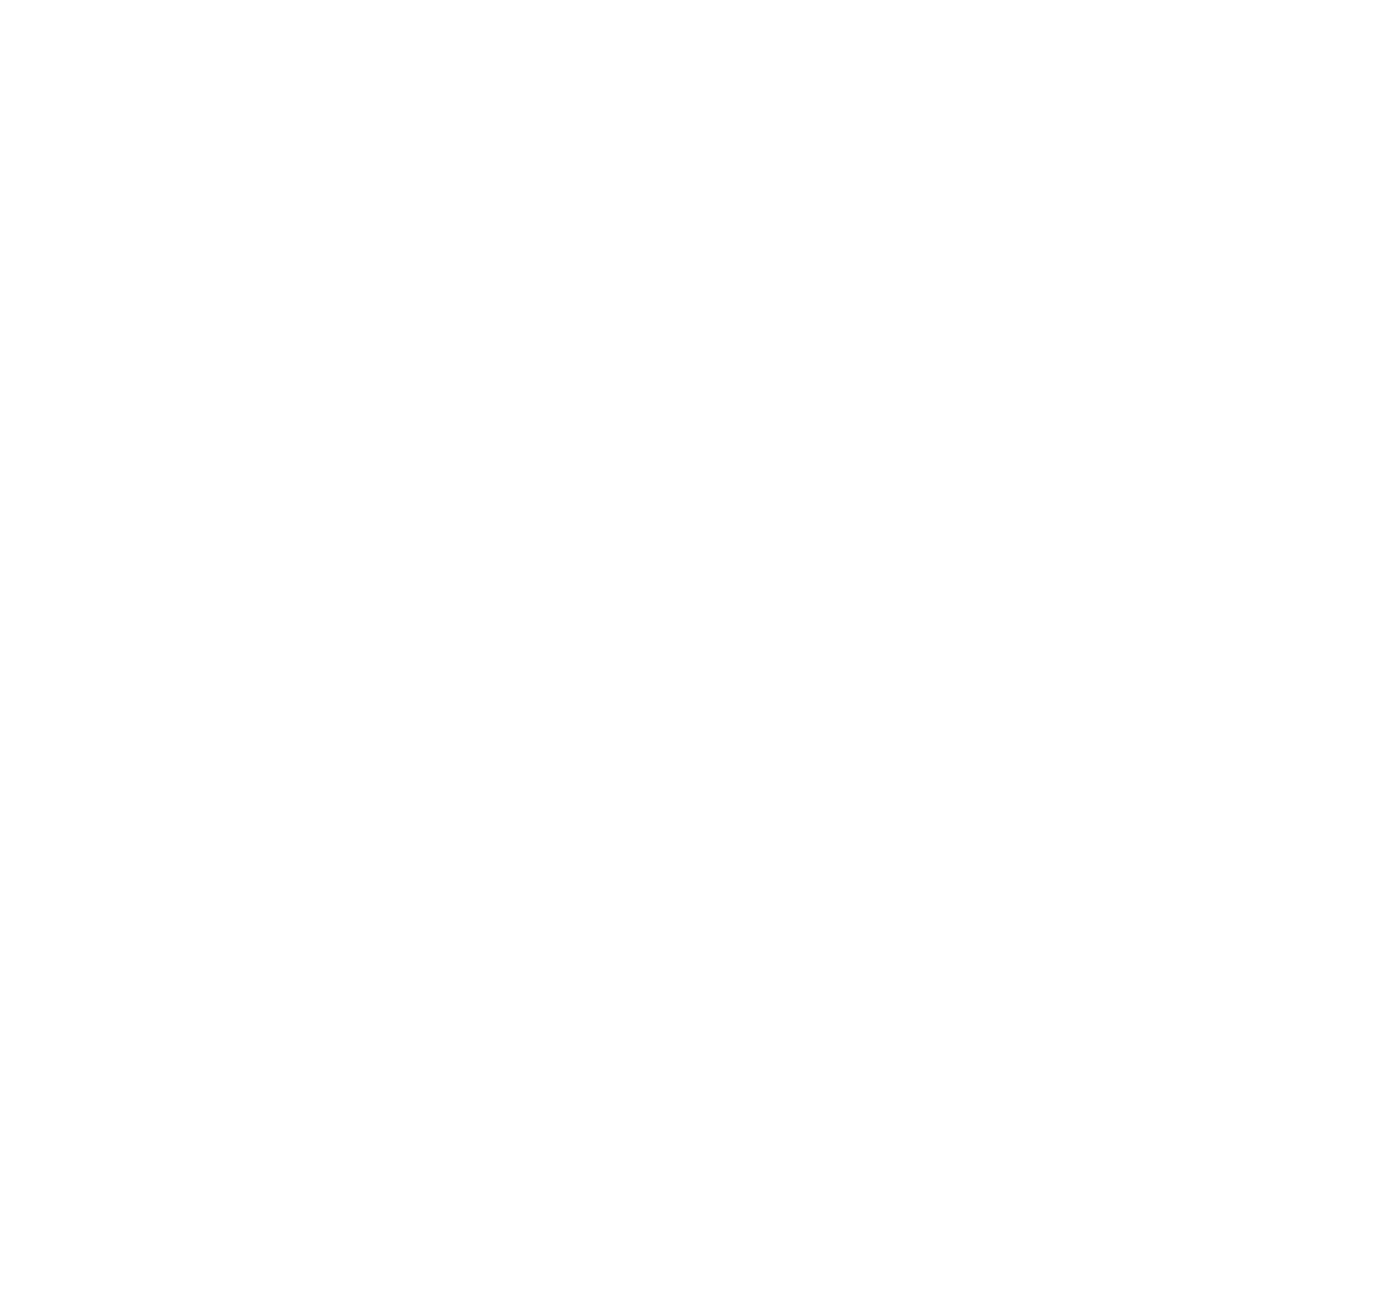 Archid Builders